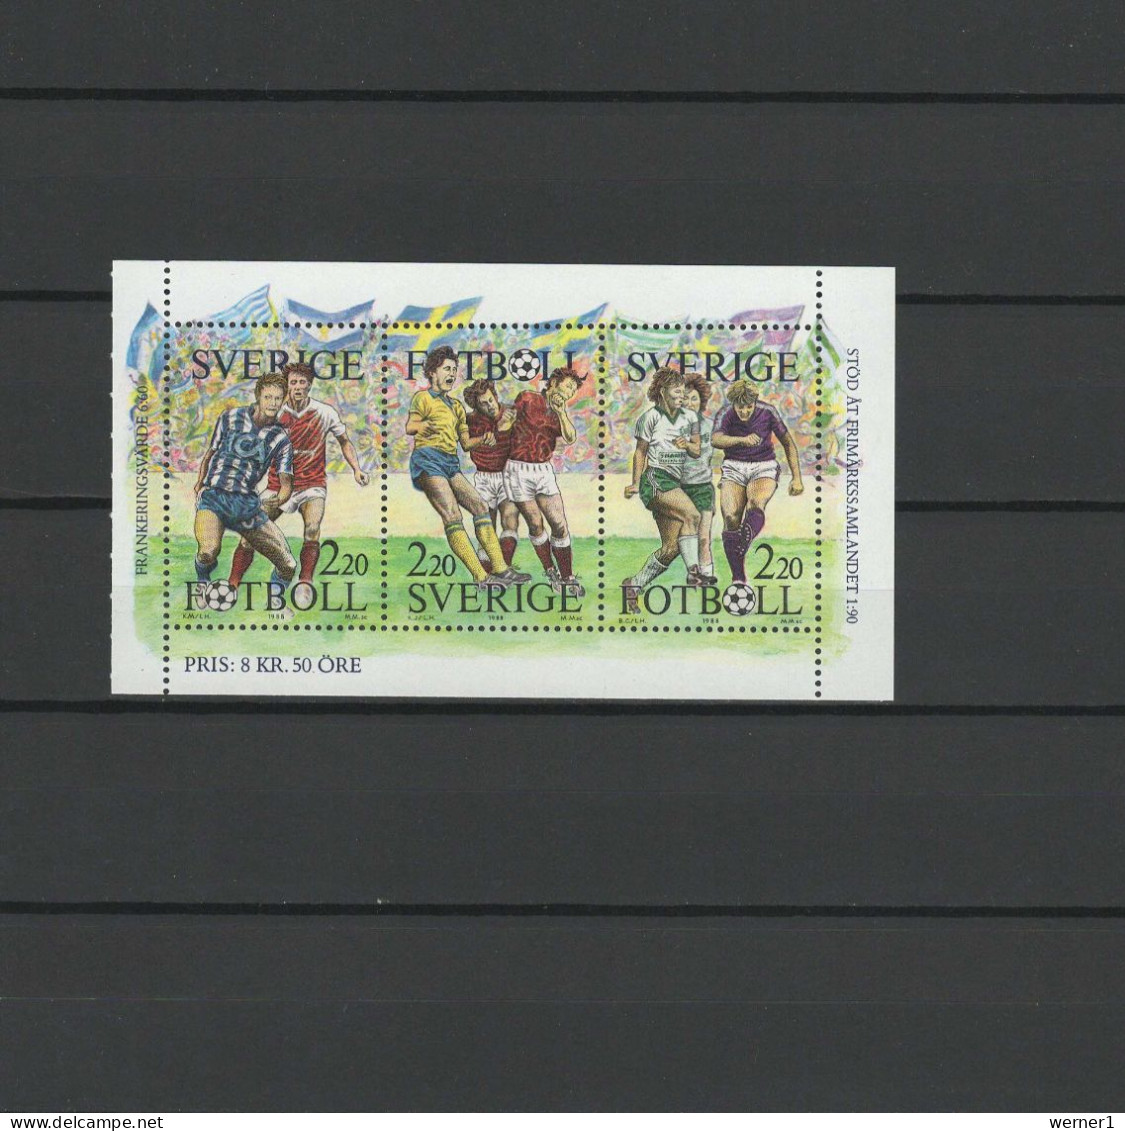 Sweden 1988 Football Soccer Booklet Pane MNH - Nuevos